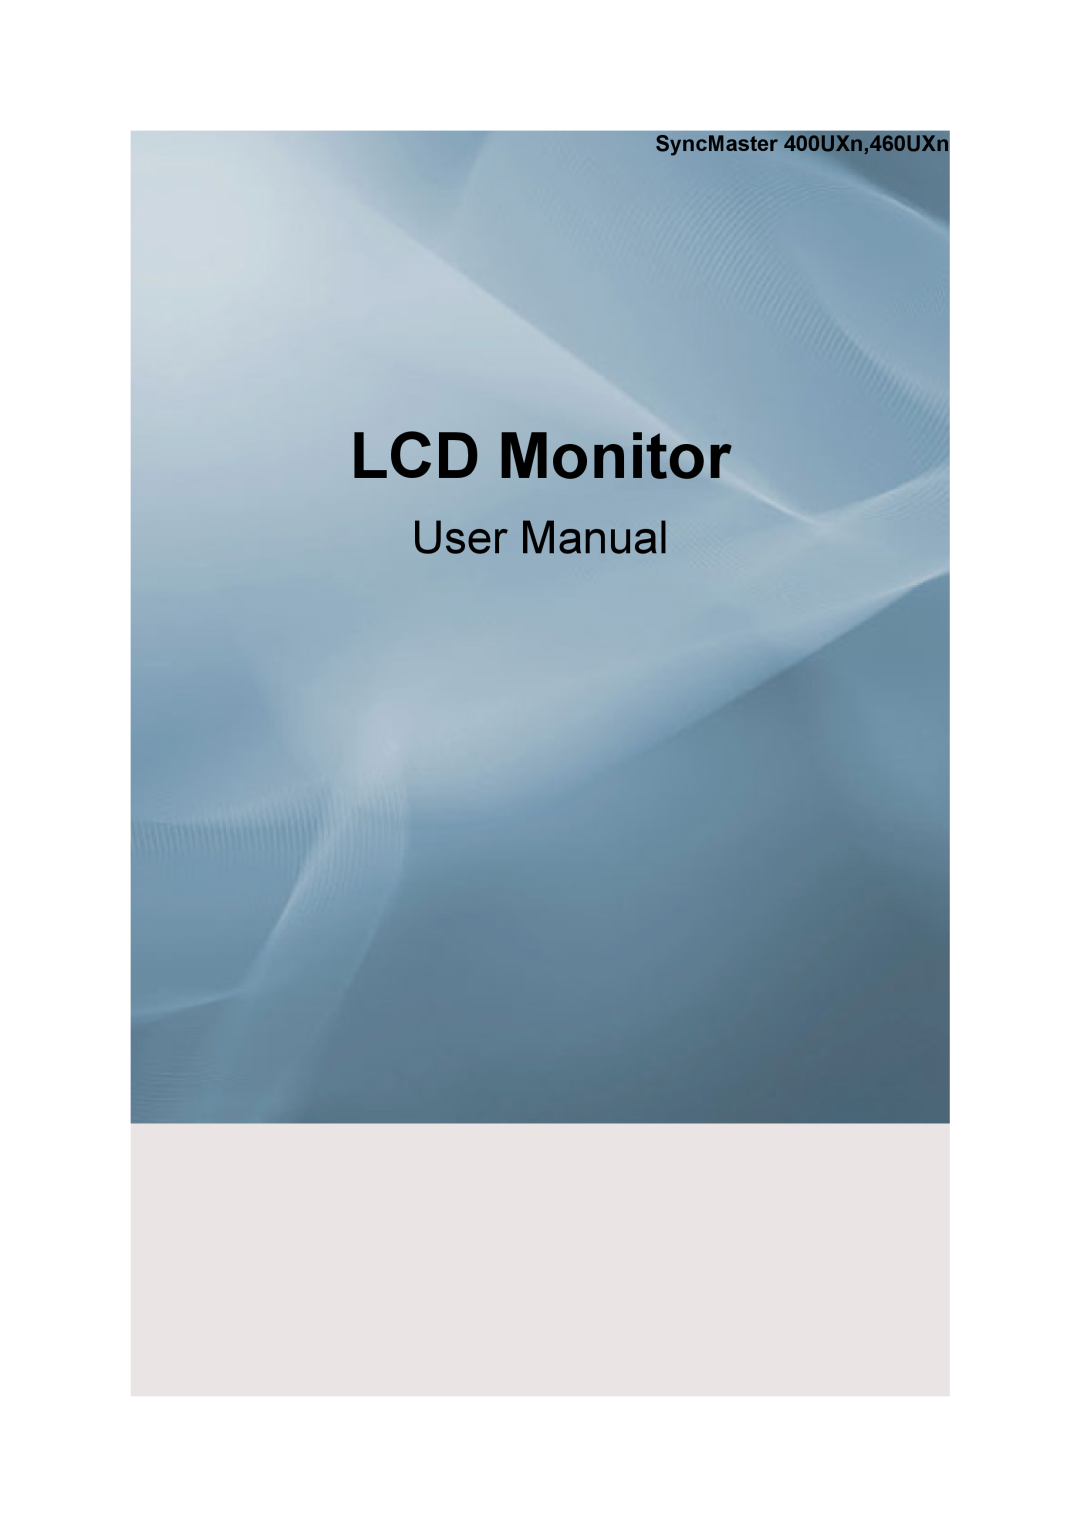 Samsung user manual SyncMaster 400UXn,460UXn, LCD Monitor, User Manual 